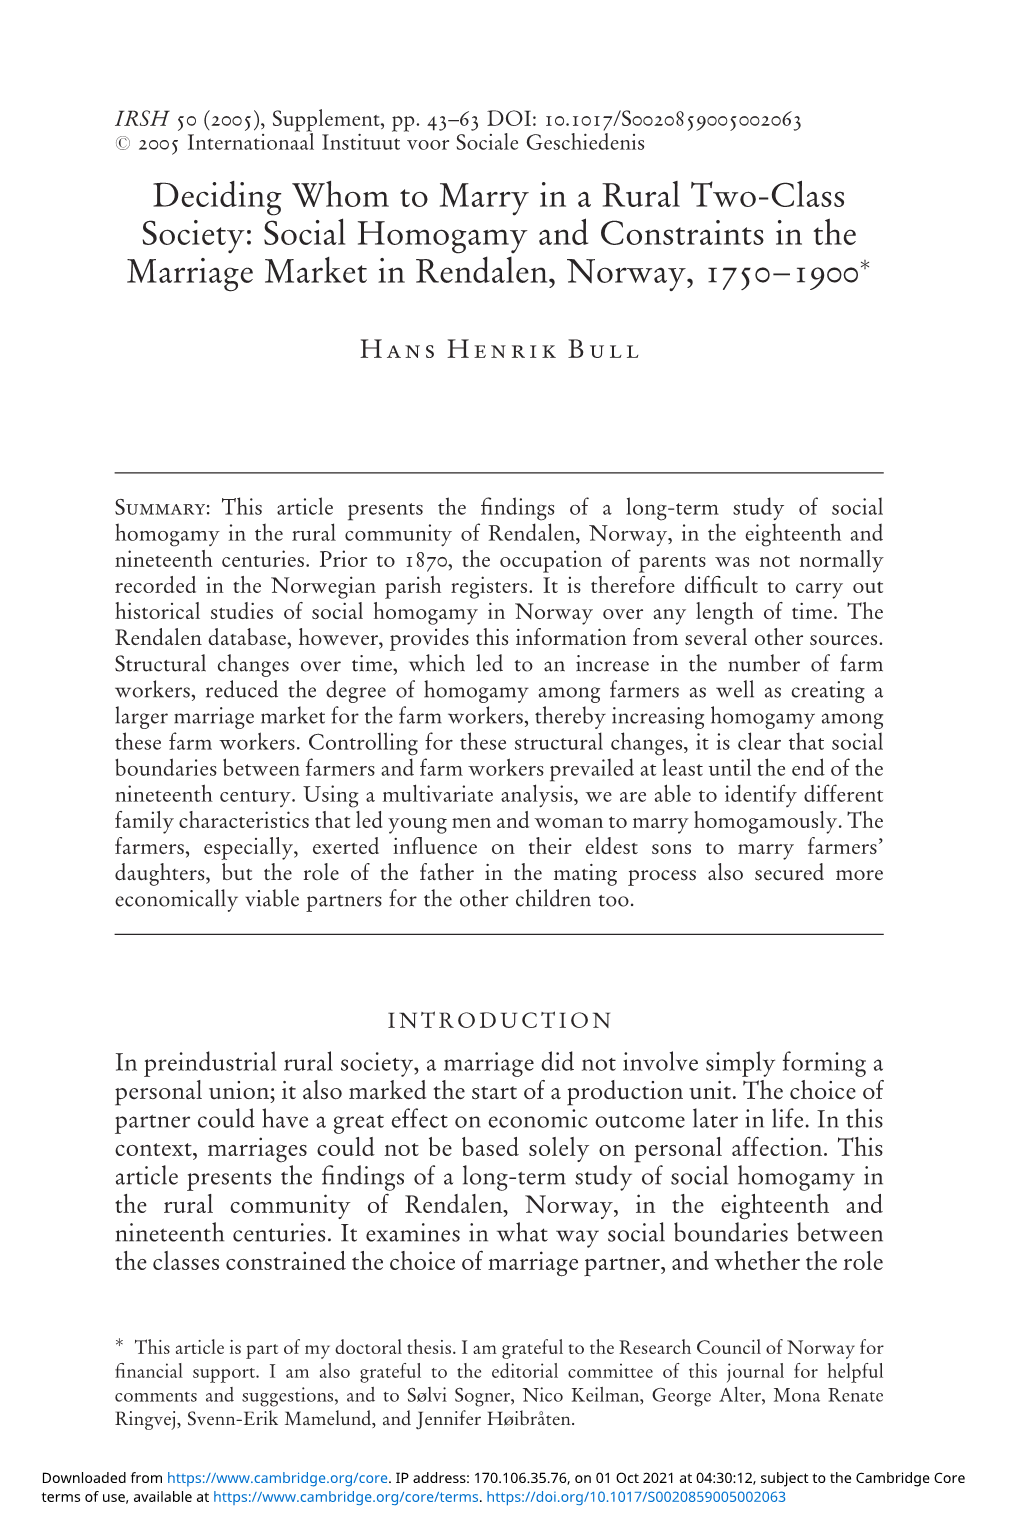 Social Homogamy and Constraints in the Marriage Market in Rendalen, Norway, 1750–1900